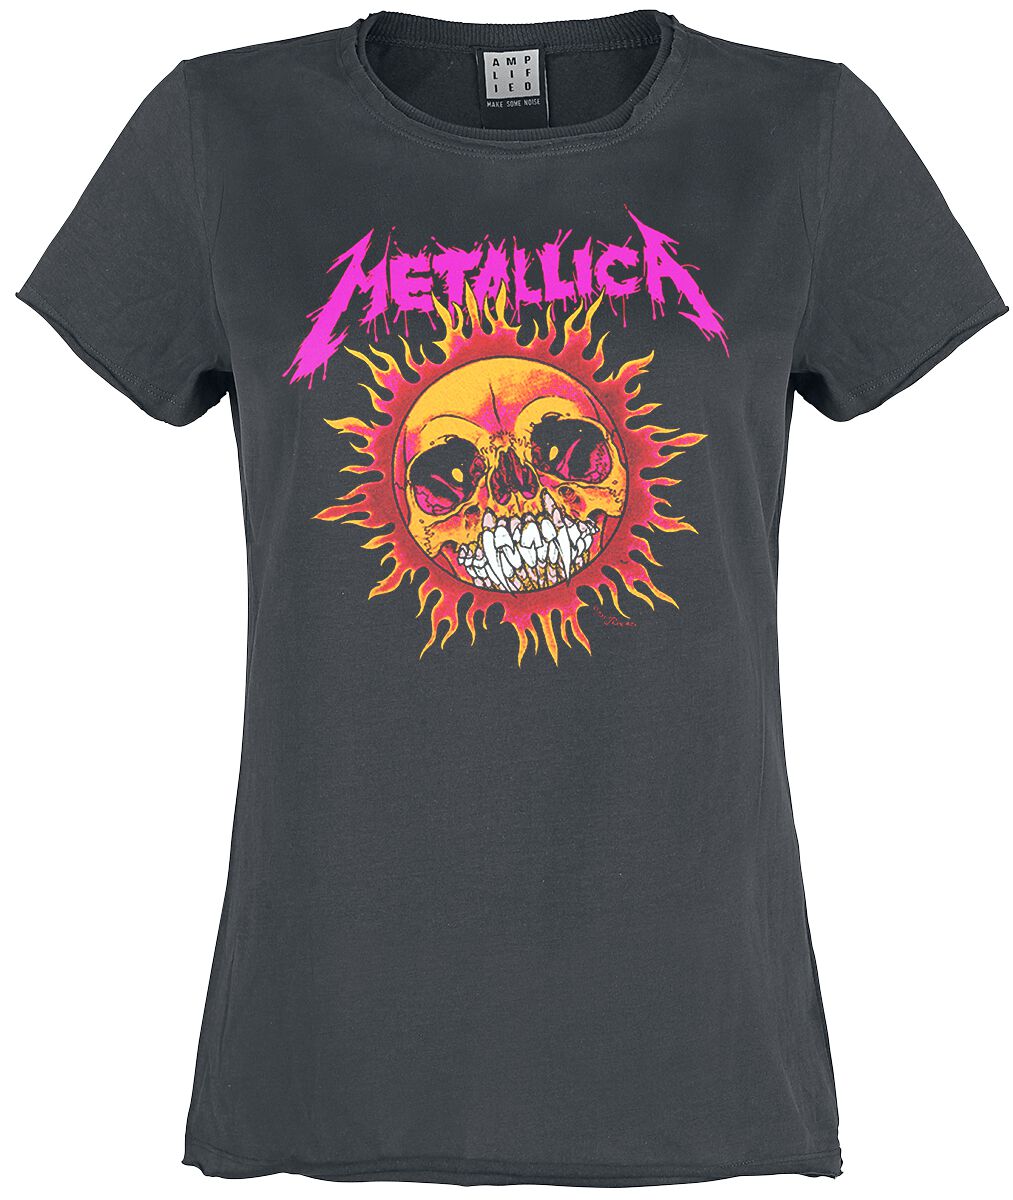 Metallica Amplified Collection - Neon Sun T-Shirt altweiß in M